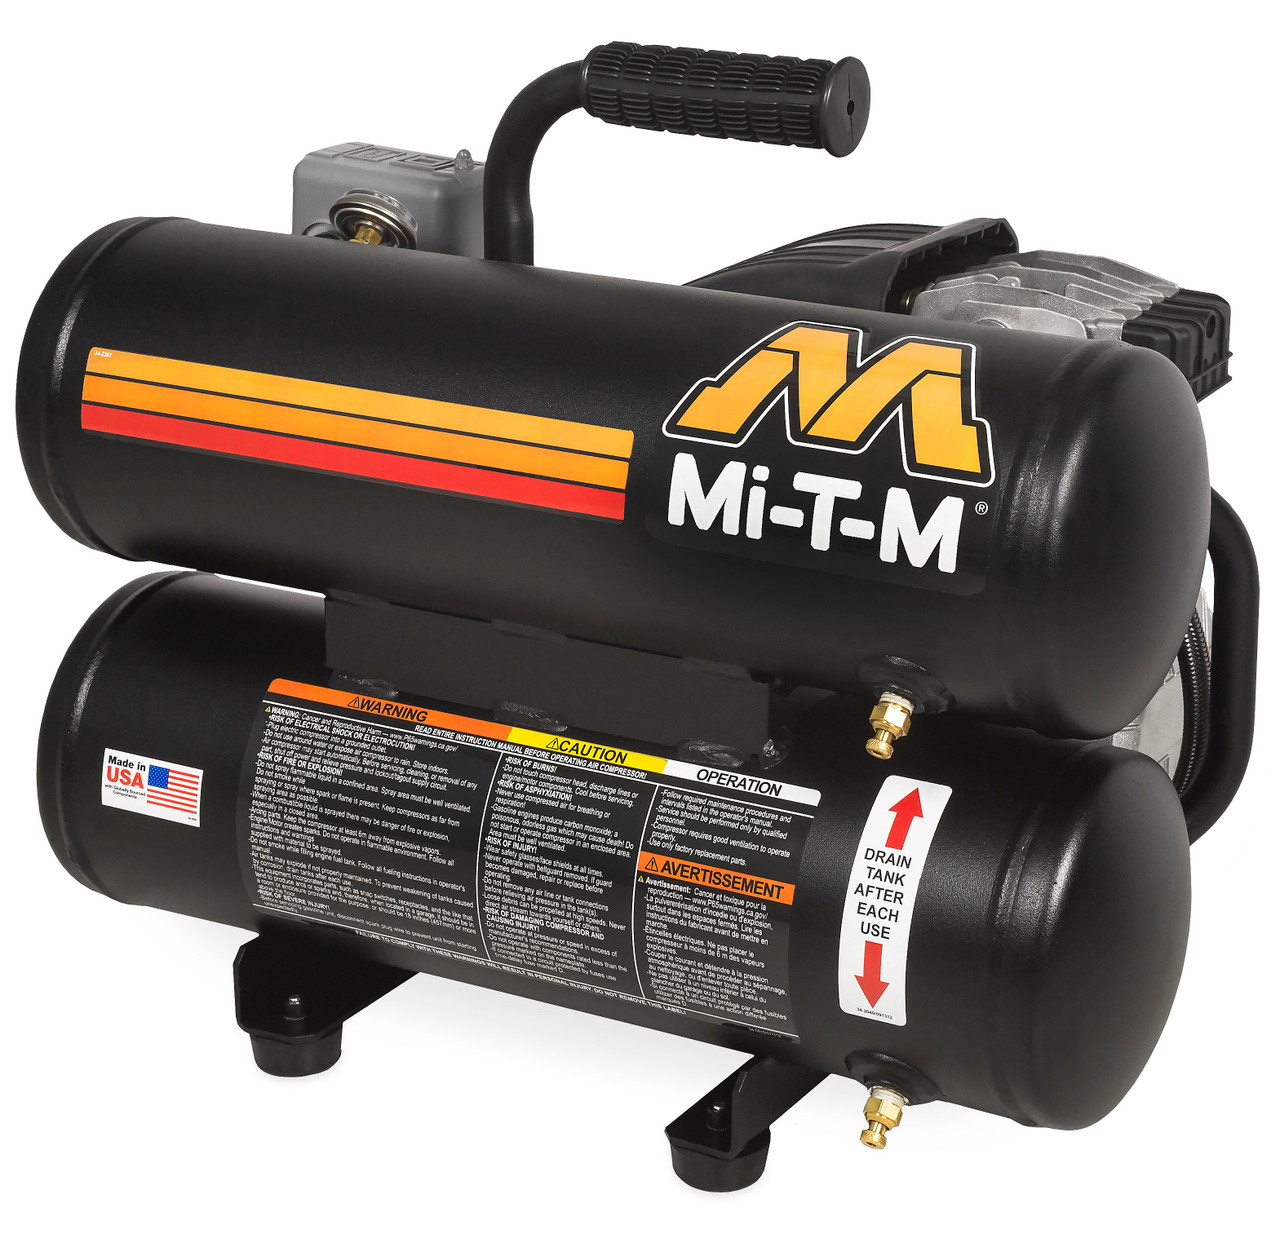 Mi-T-M AM1-HE02-05M Electric Air Compressors ,5-Gallon Single Stage Electric